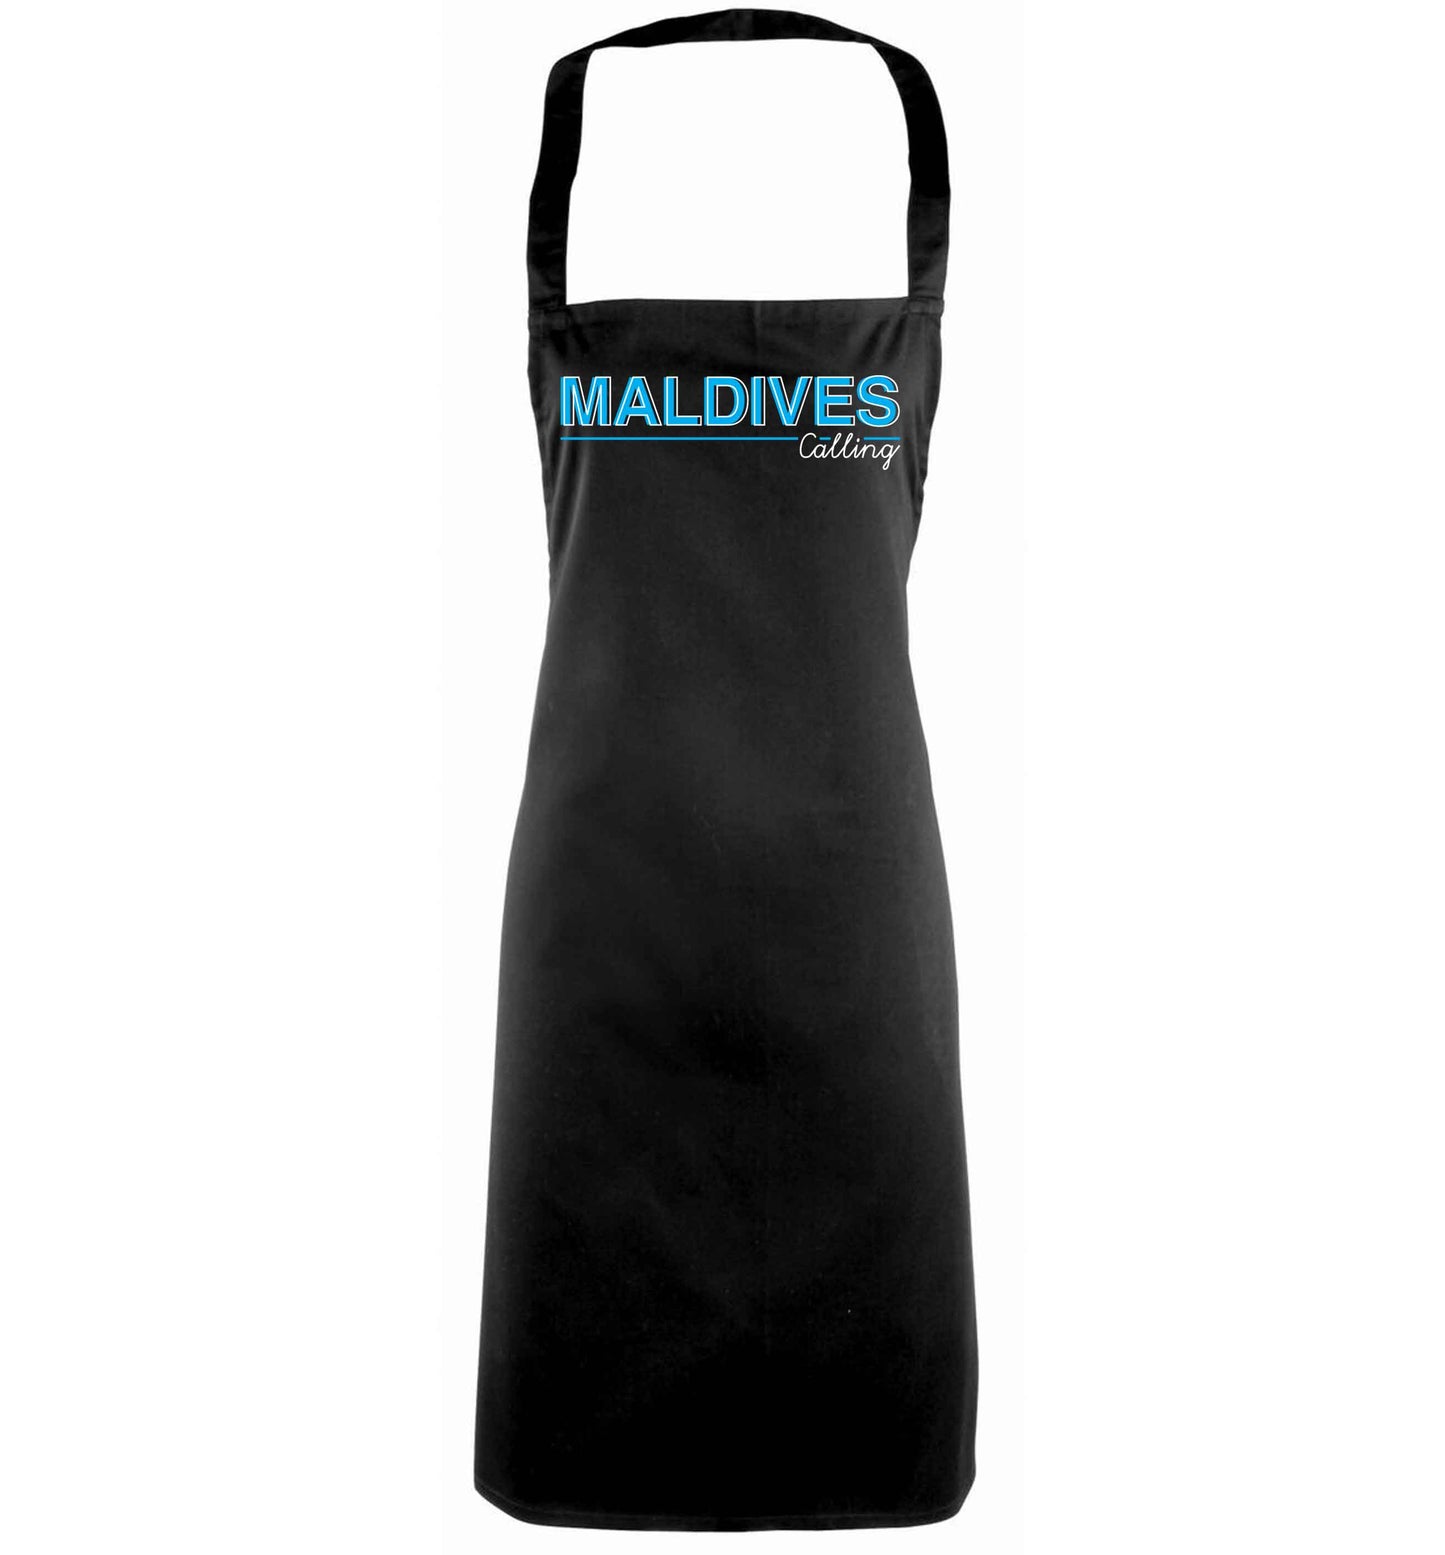 Maldives calling black apron